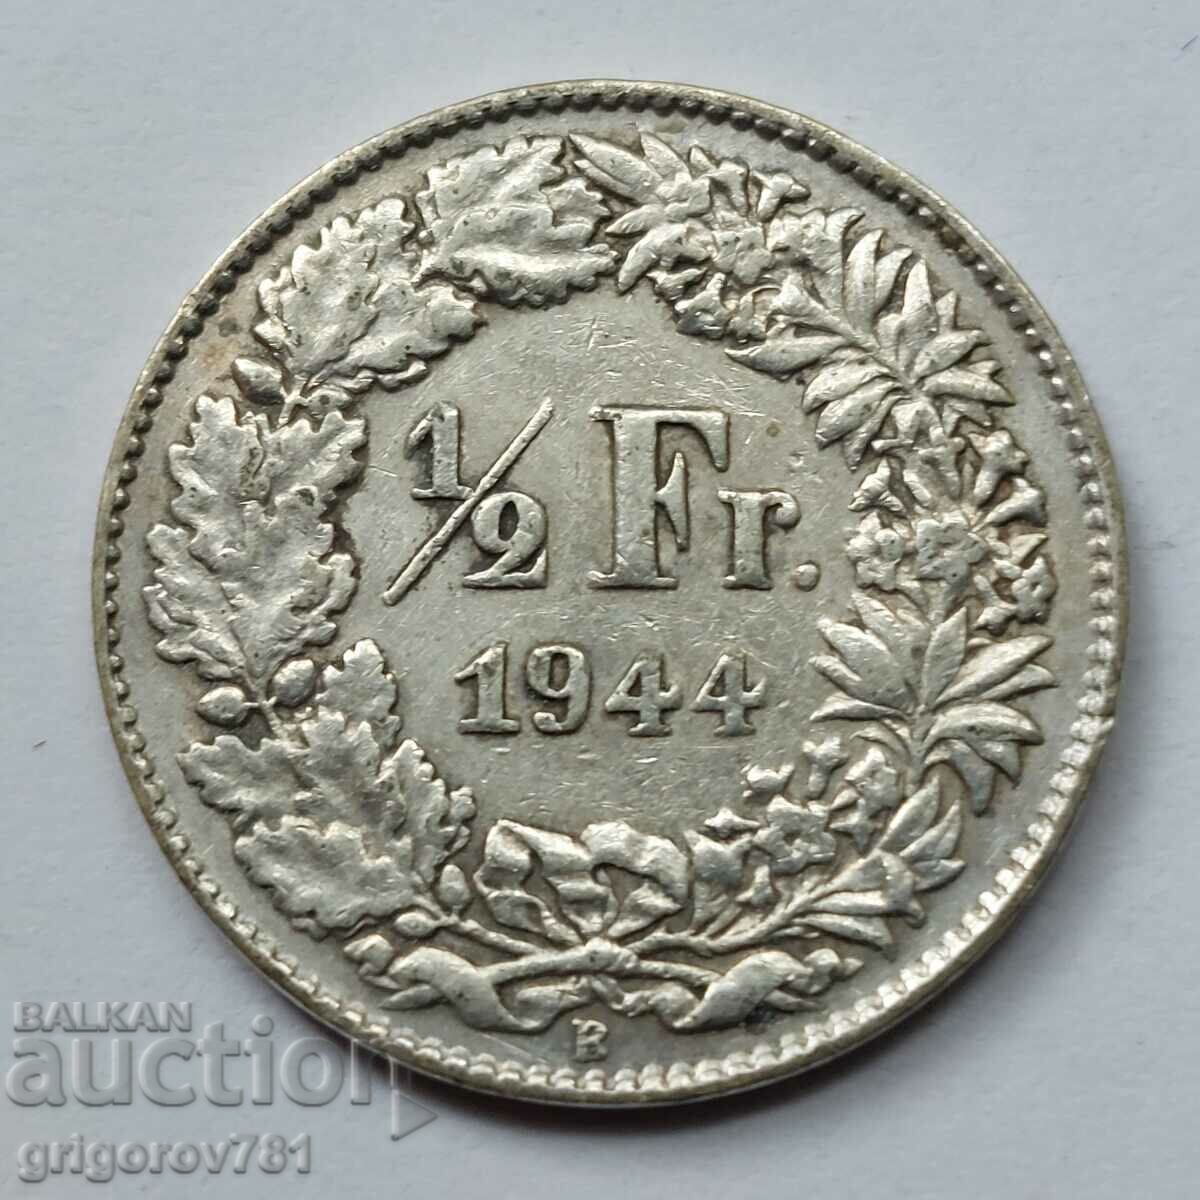 1/2 Franc Silver Switzerland 1944 B - Silver Coin #39